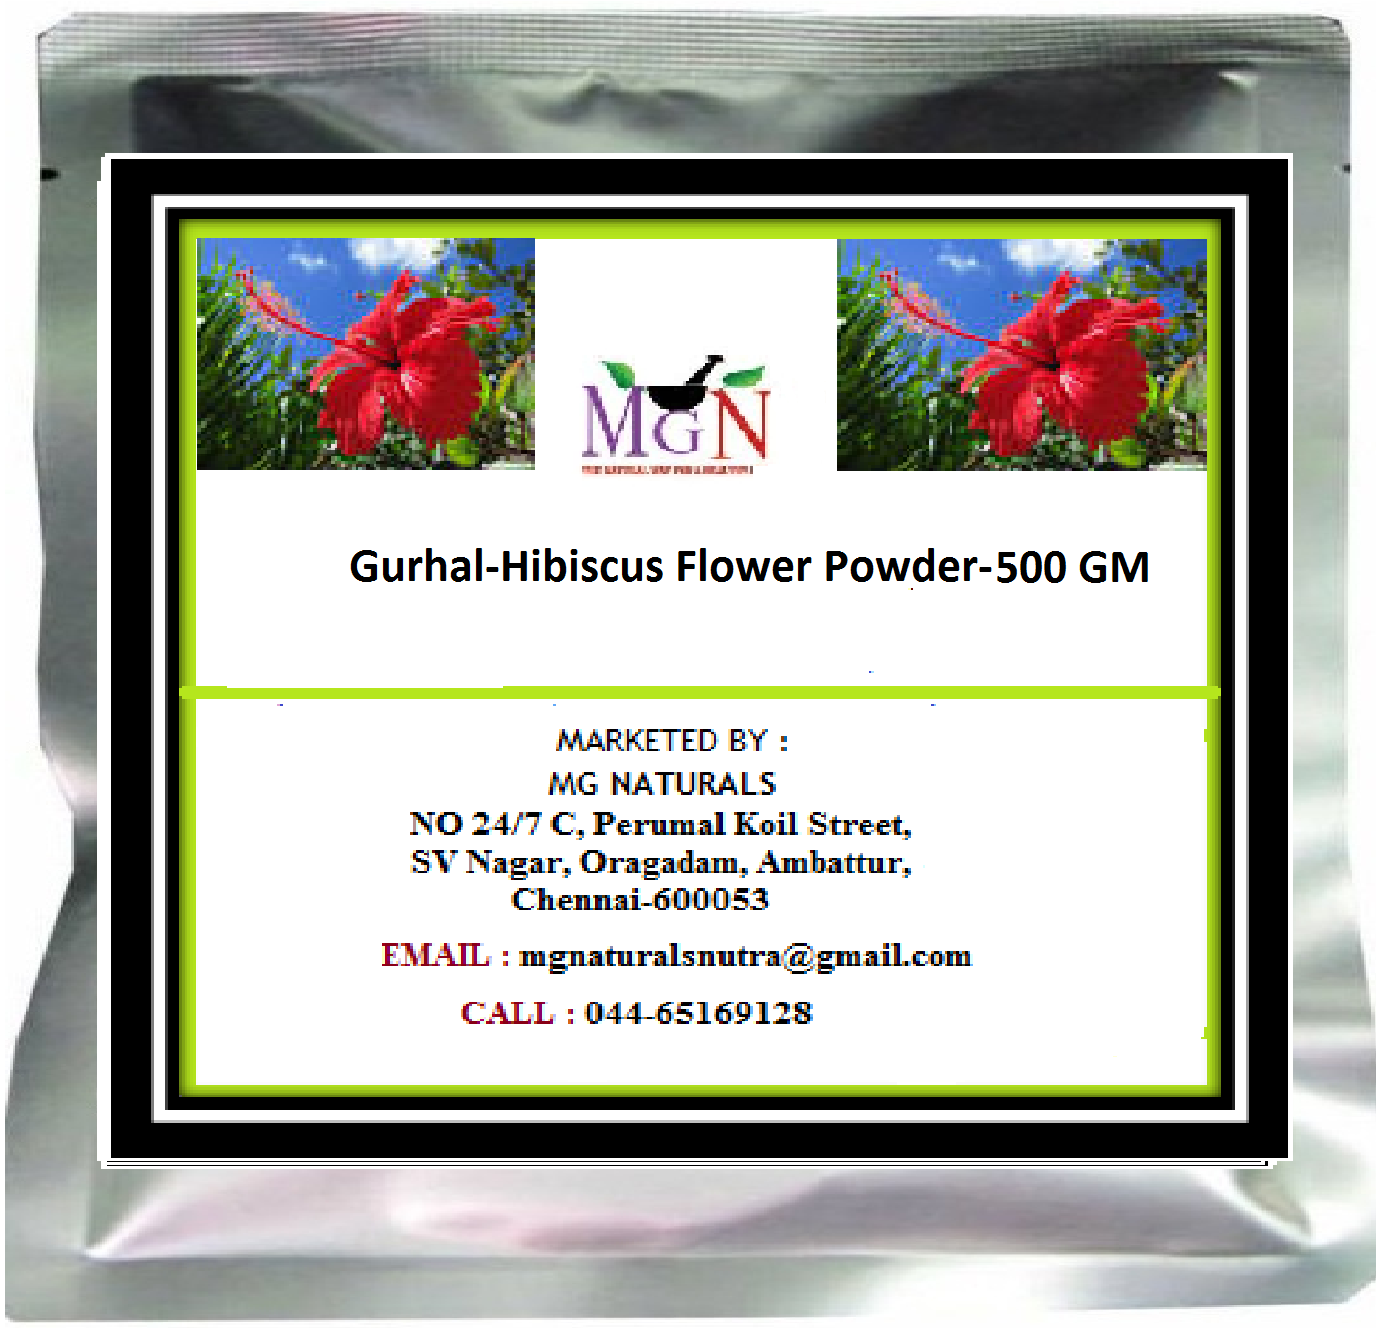 MG Naturals GURHAL-HIBISCUS FLOWER POWDER 500 GM Facial Kit gm ...